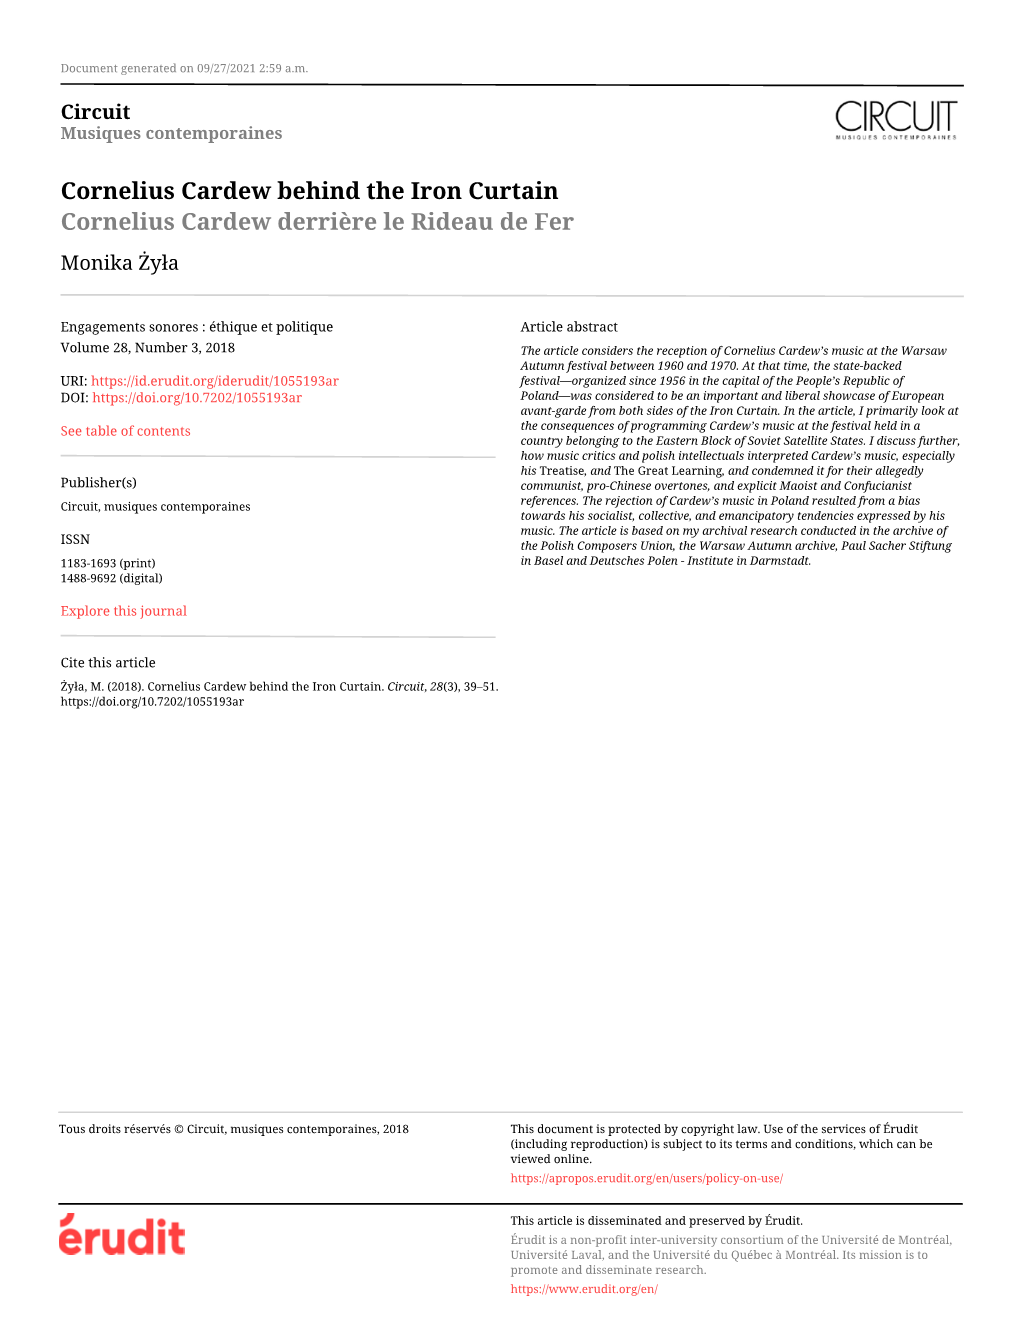 Cornelius Cardew Behind the Iron Curtain Cornelius Cardew Derrière Le Rideau De Fer Monika Żyła